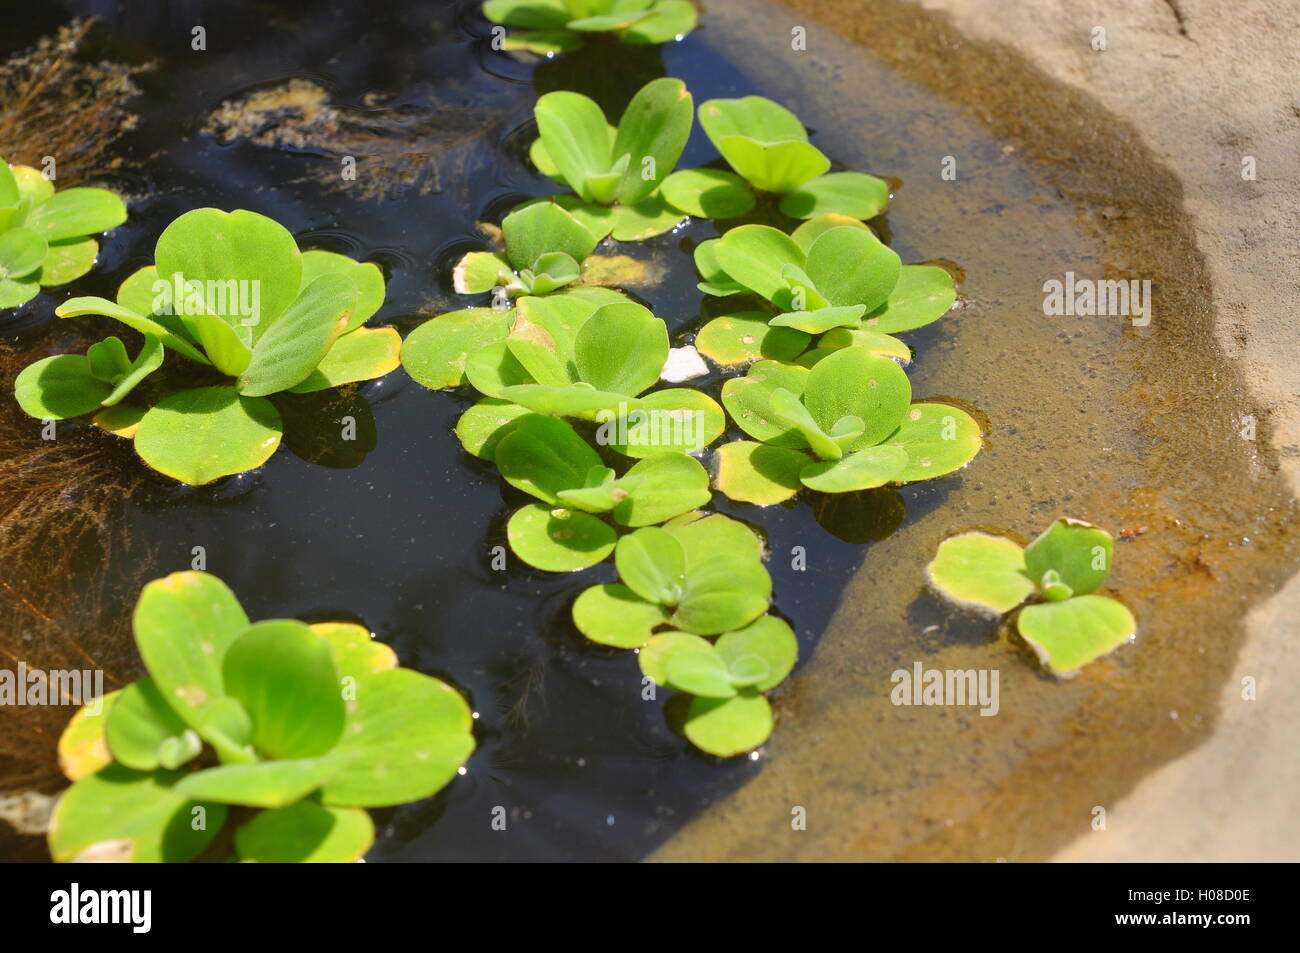 Green duckweed on the water Stock Photo